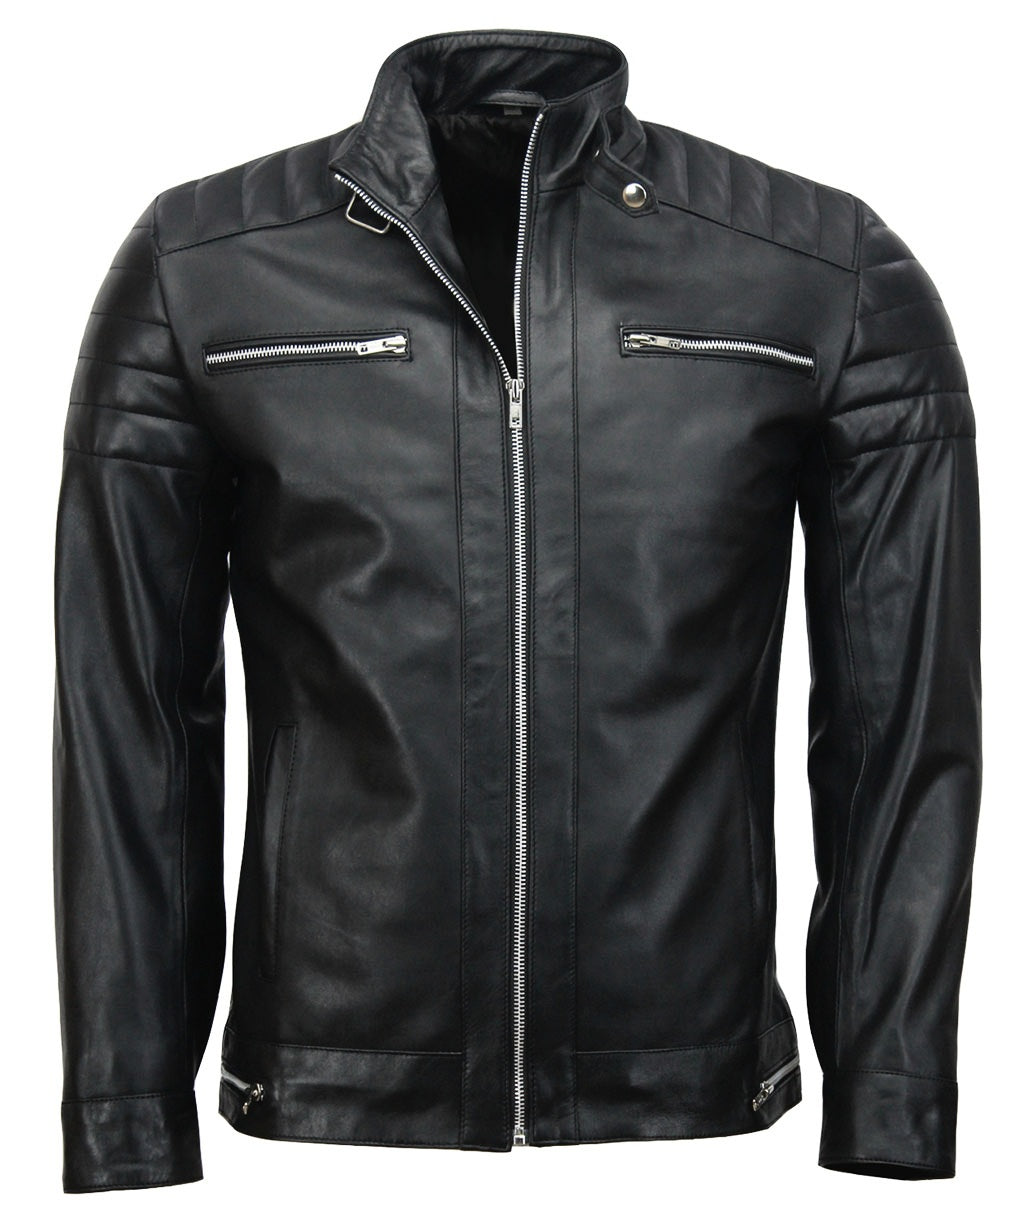 Andrew Tate Top G Black Leather Jacket - Alex Gear – AlexGear